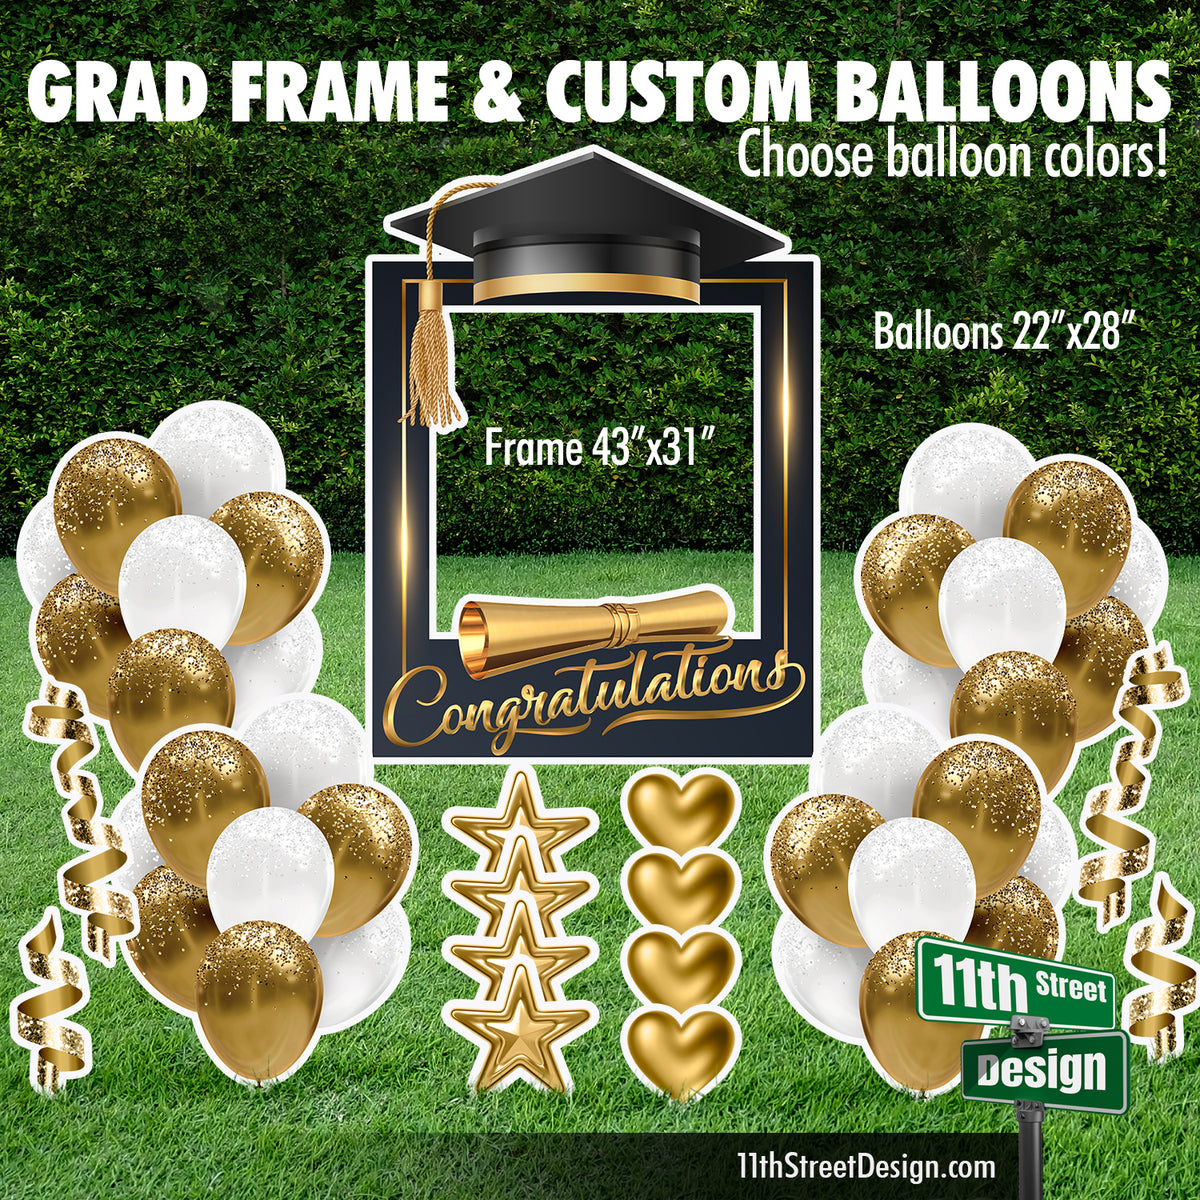 Grad Frame With Custom Balloons - Yard Card Setup Fillers